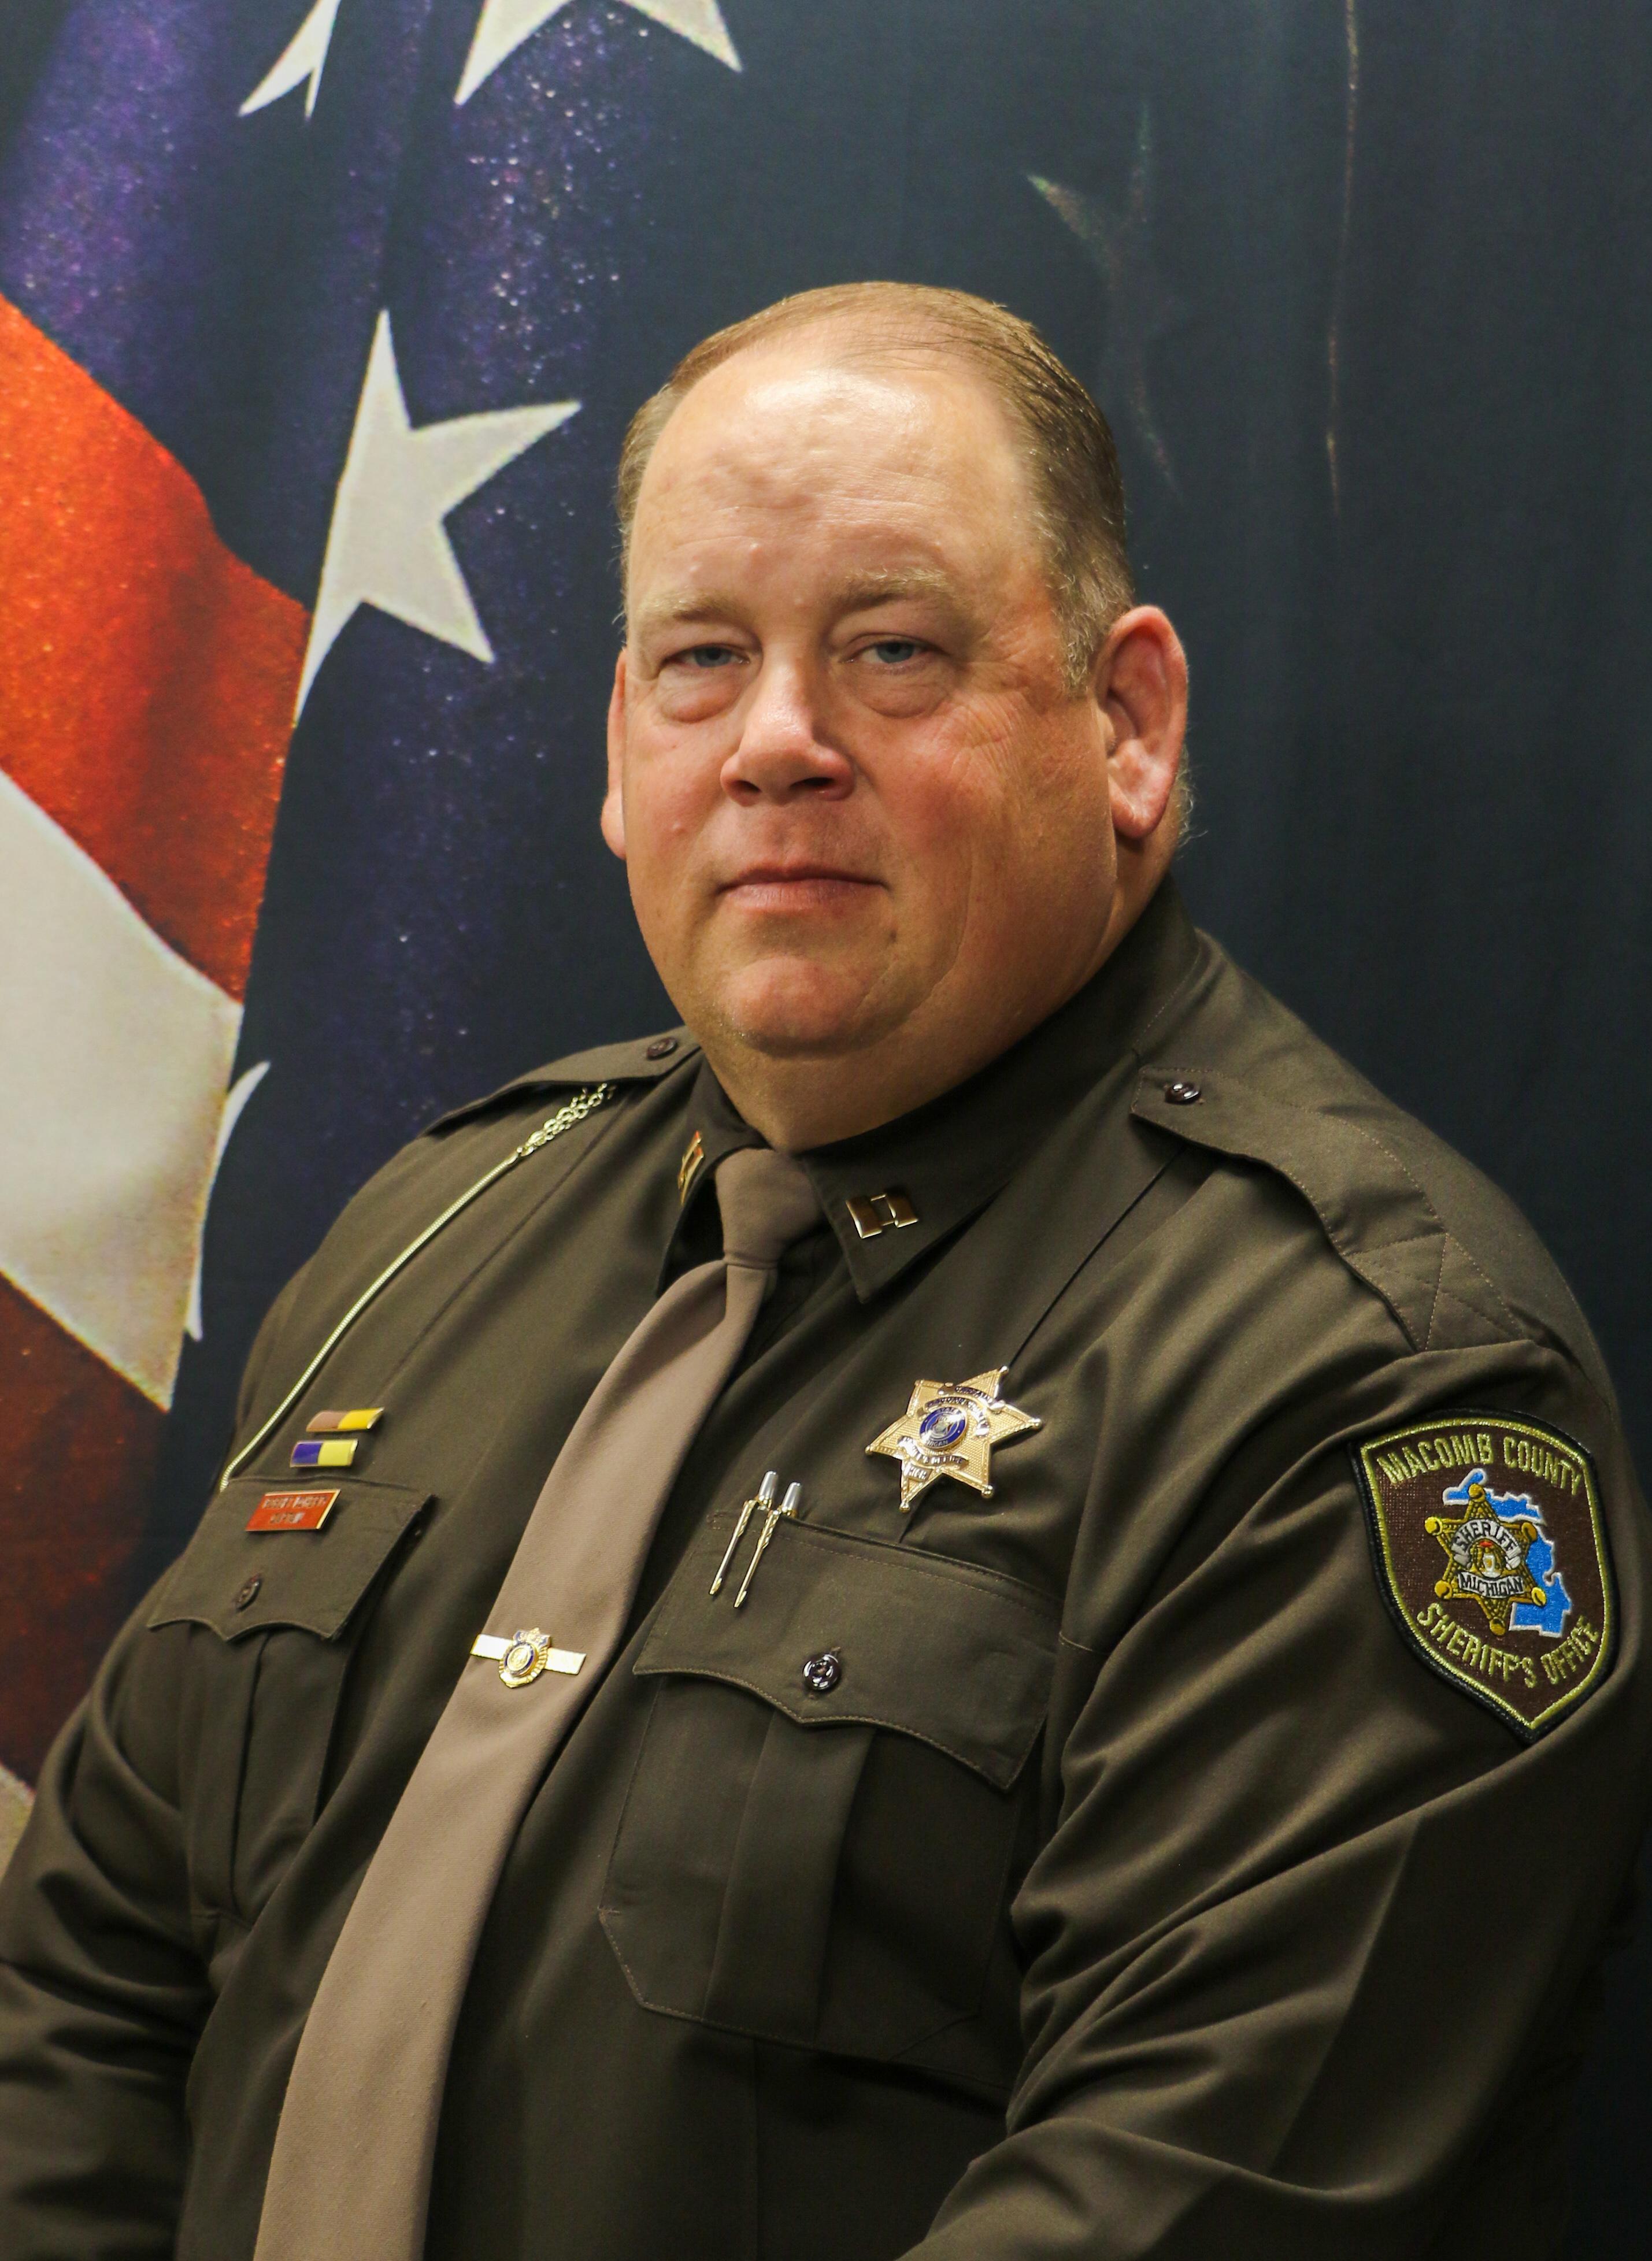 Sheriff - Captain Doherty